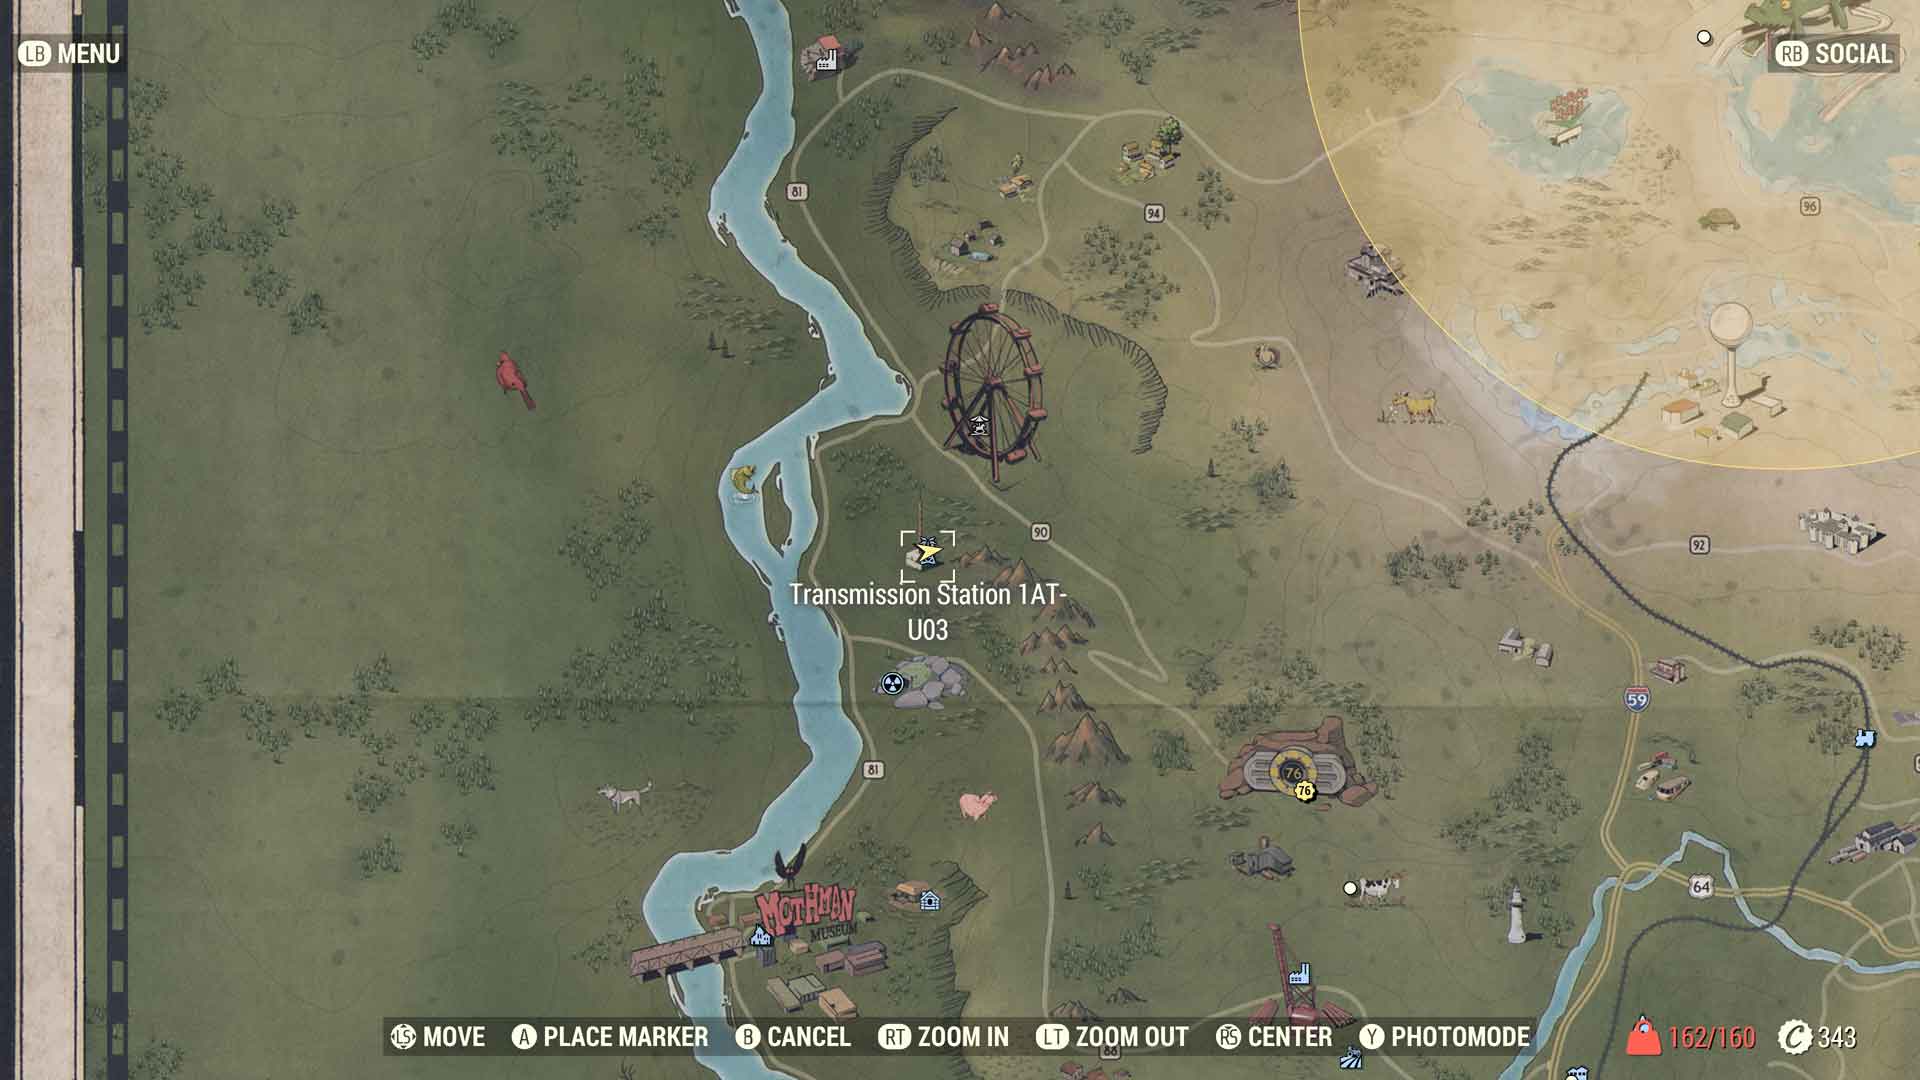 Fallout 76 Transmission Station 1AT-U03 Guide Screenshot